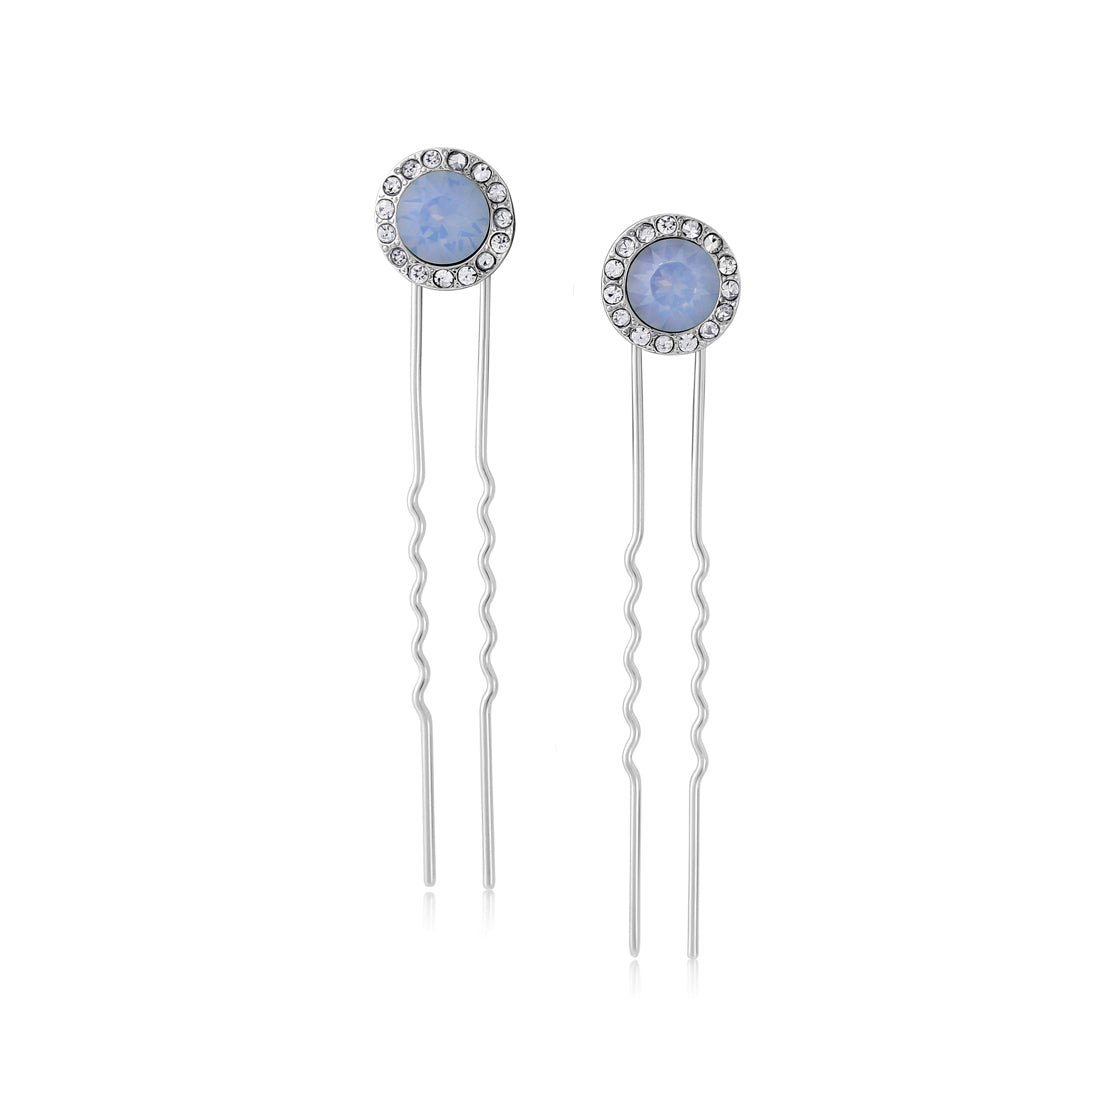 Shimmering Sky Blue Crystal Hair Pins - Pair